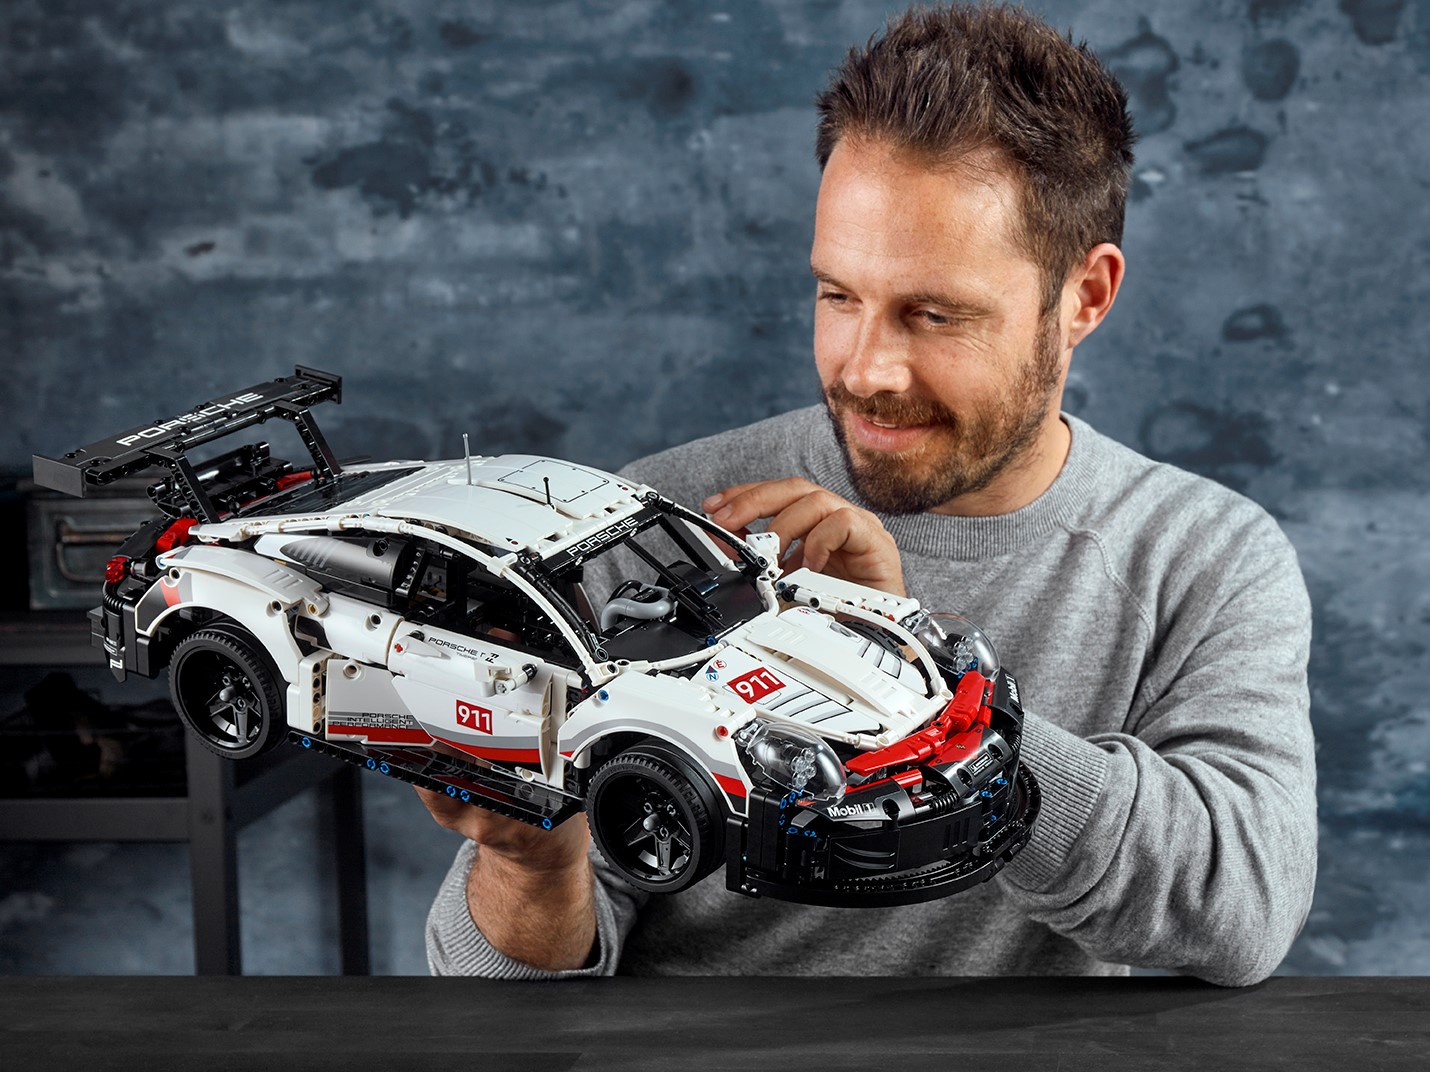 reb krone kamera Porsche 911 RSR 42096 | Technic™ | Buy online at the Official LEGO® Shop US